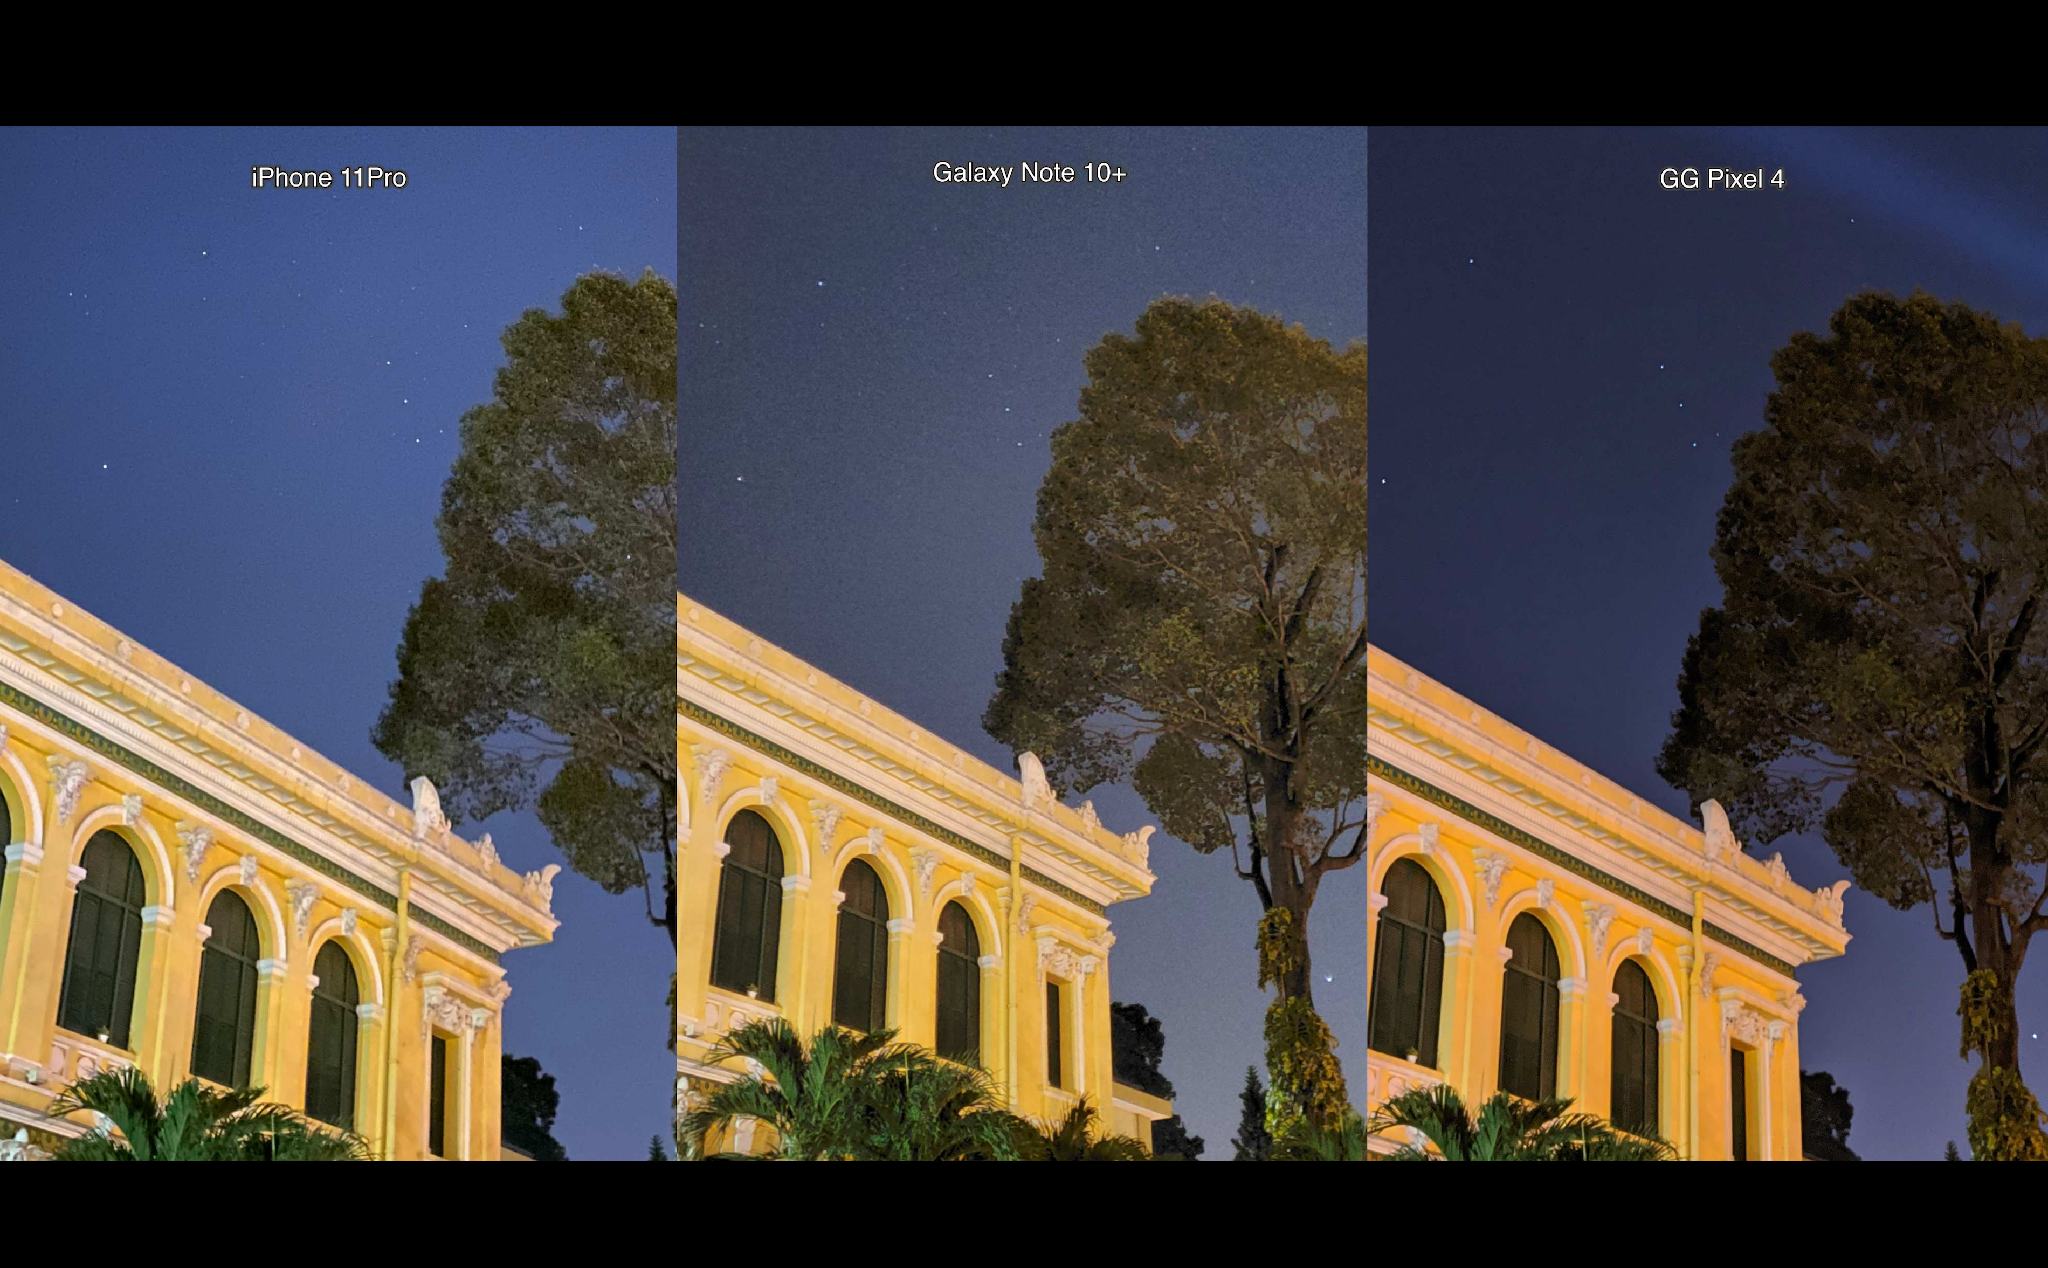 Chụp Night mode trên iPhone 11Pro | GG Pixel 4 | Galaxy Note 10+